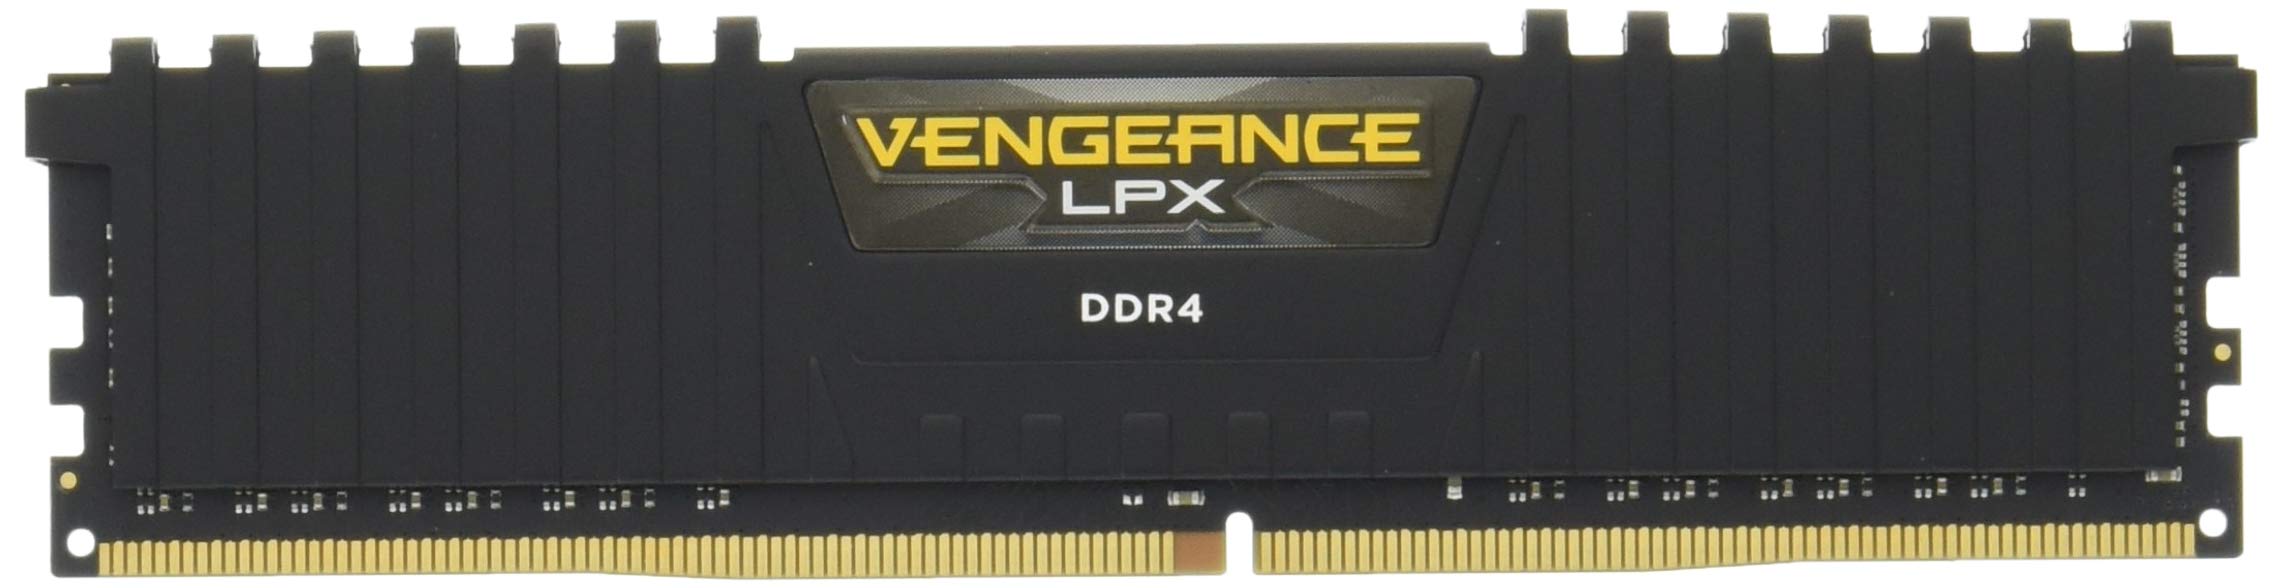 Corsair CMK8GX4M1A2400C16 Vengeance LPX 8 GB (1 x 8 GB) DDR4 2400 MHz C16 XMP 2.0 High Performance Desktop Memory Module, Black